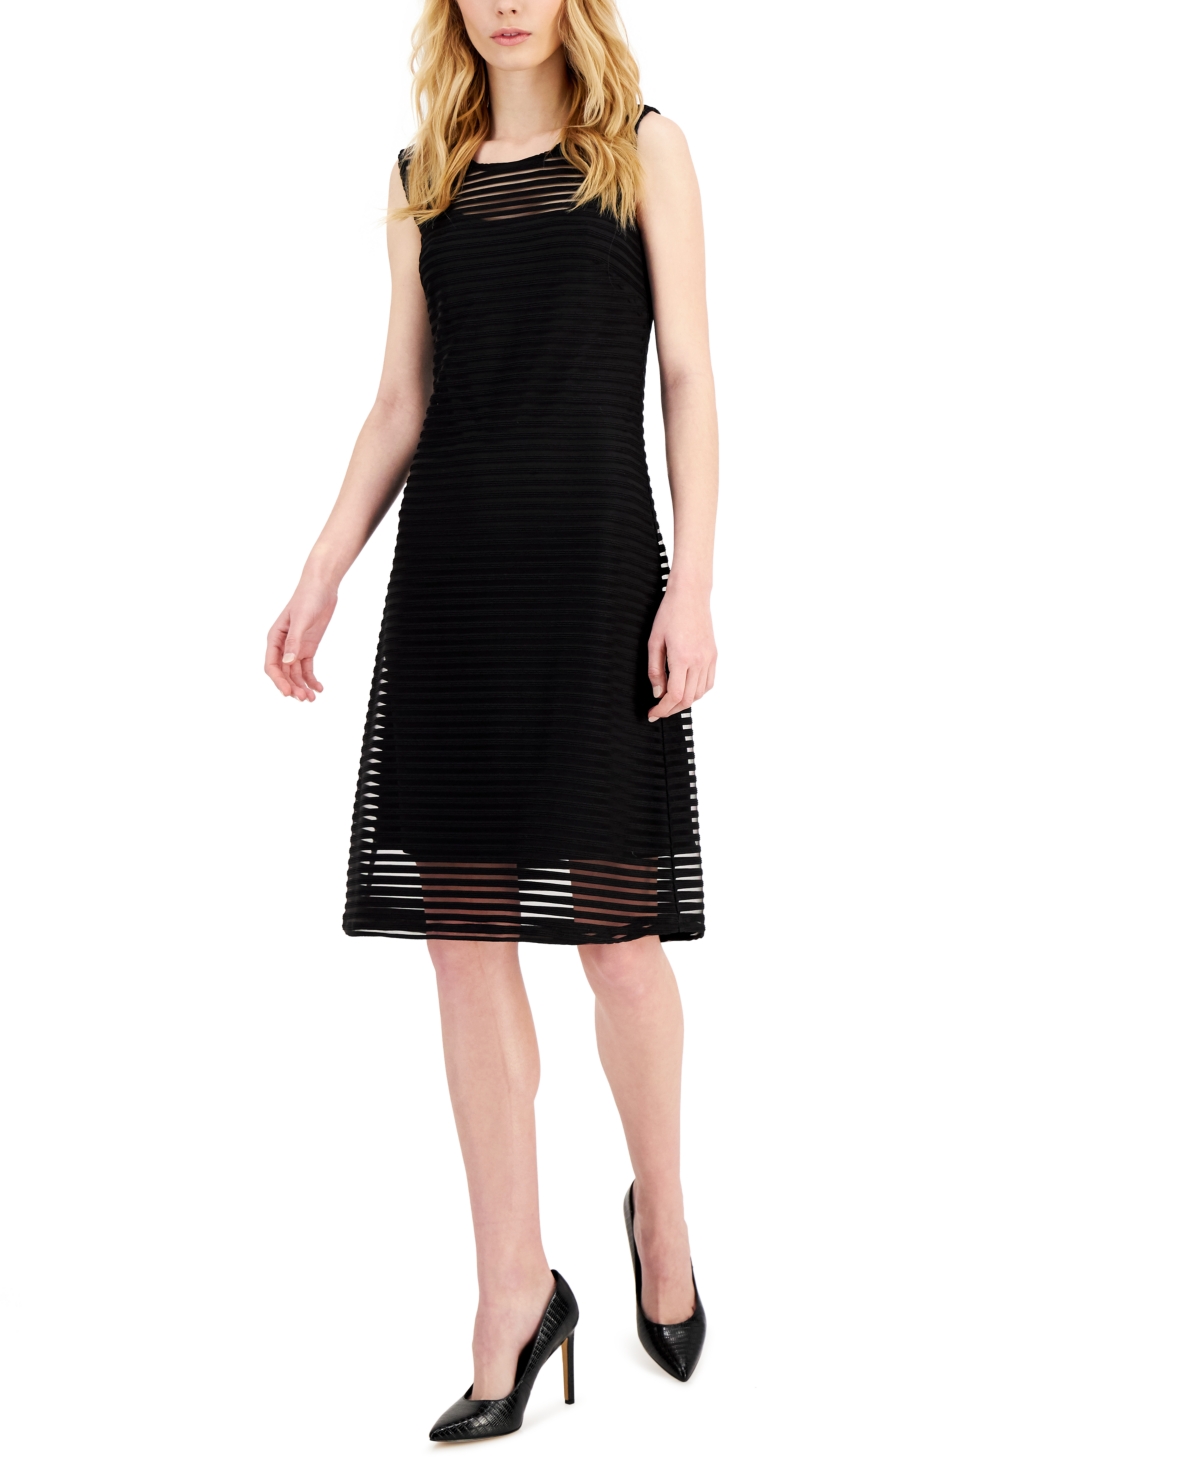 Donna Karan Shadow-Striped Dress